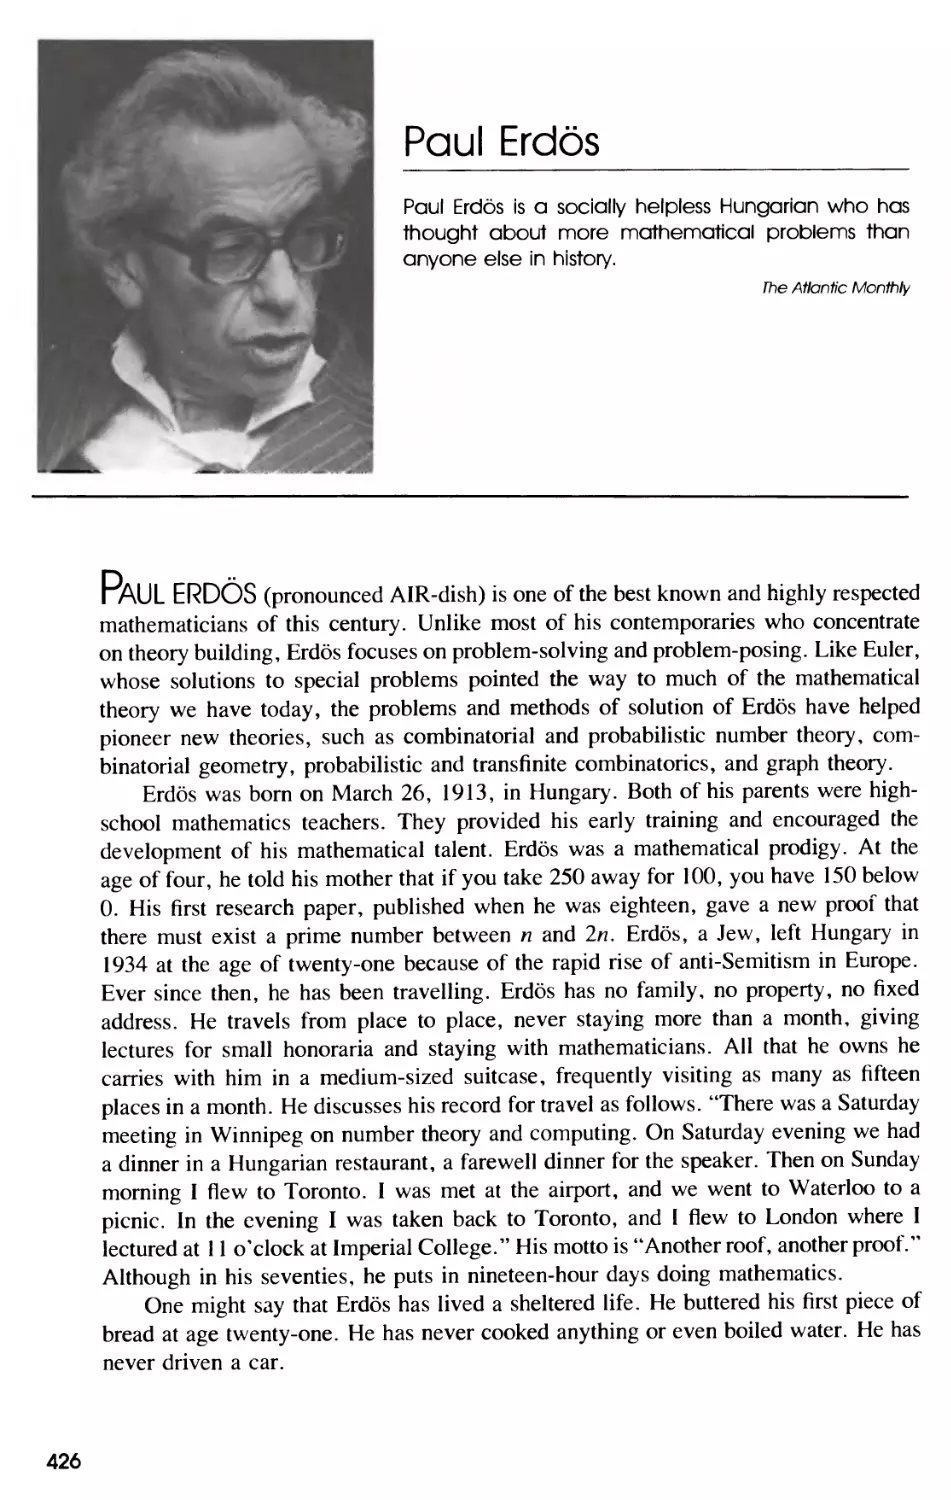 Biography of Paul Erdos